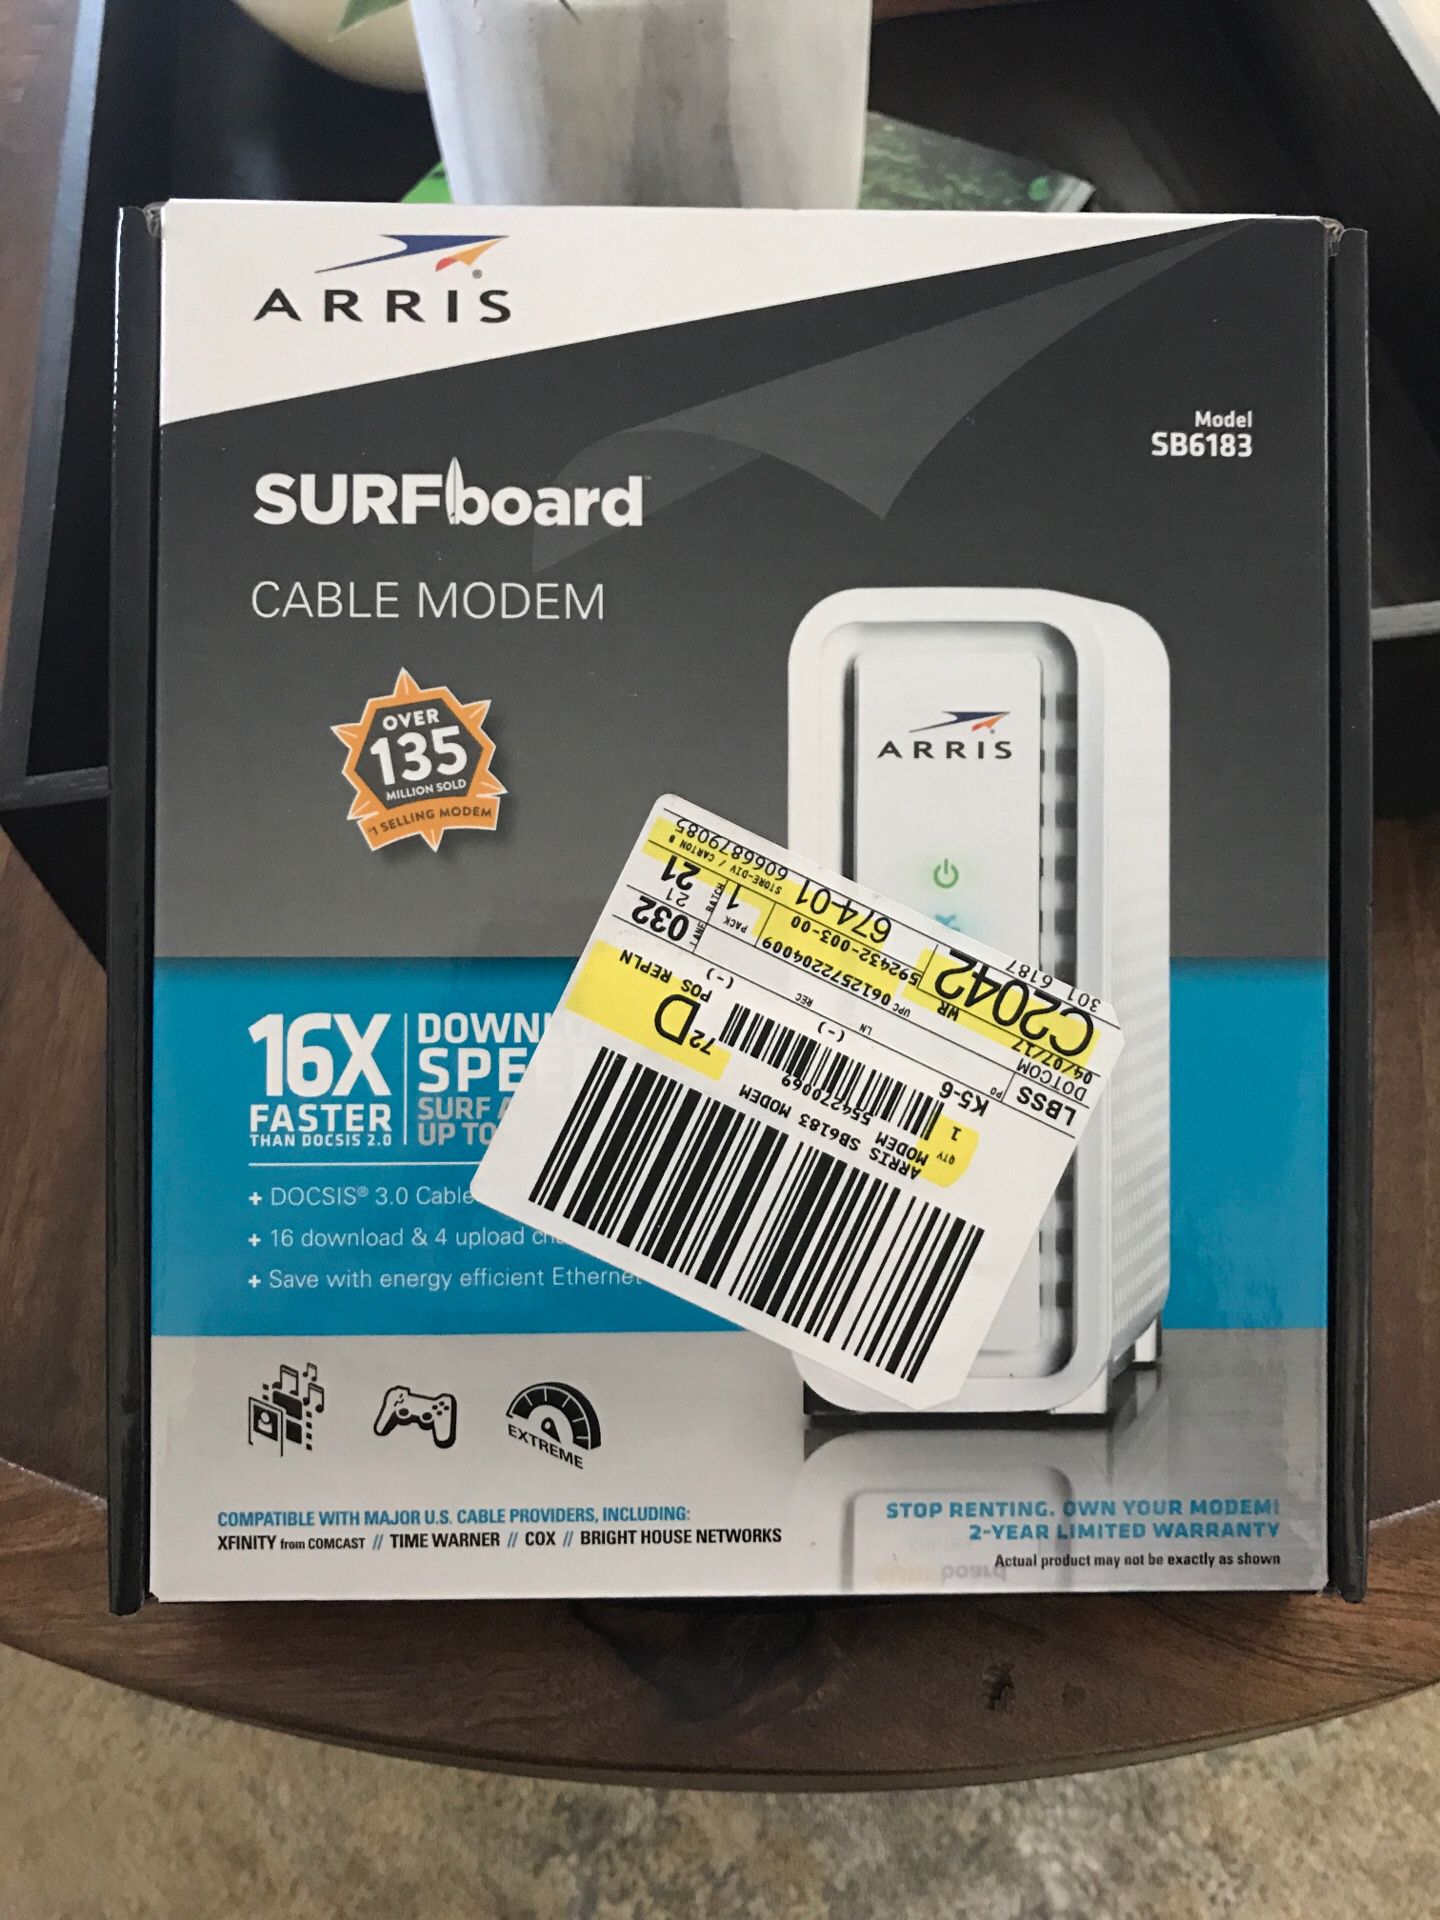 ARRIS SURFboard Cable Modem Model SB6183